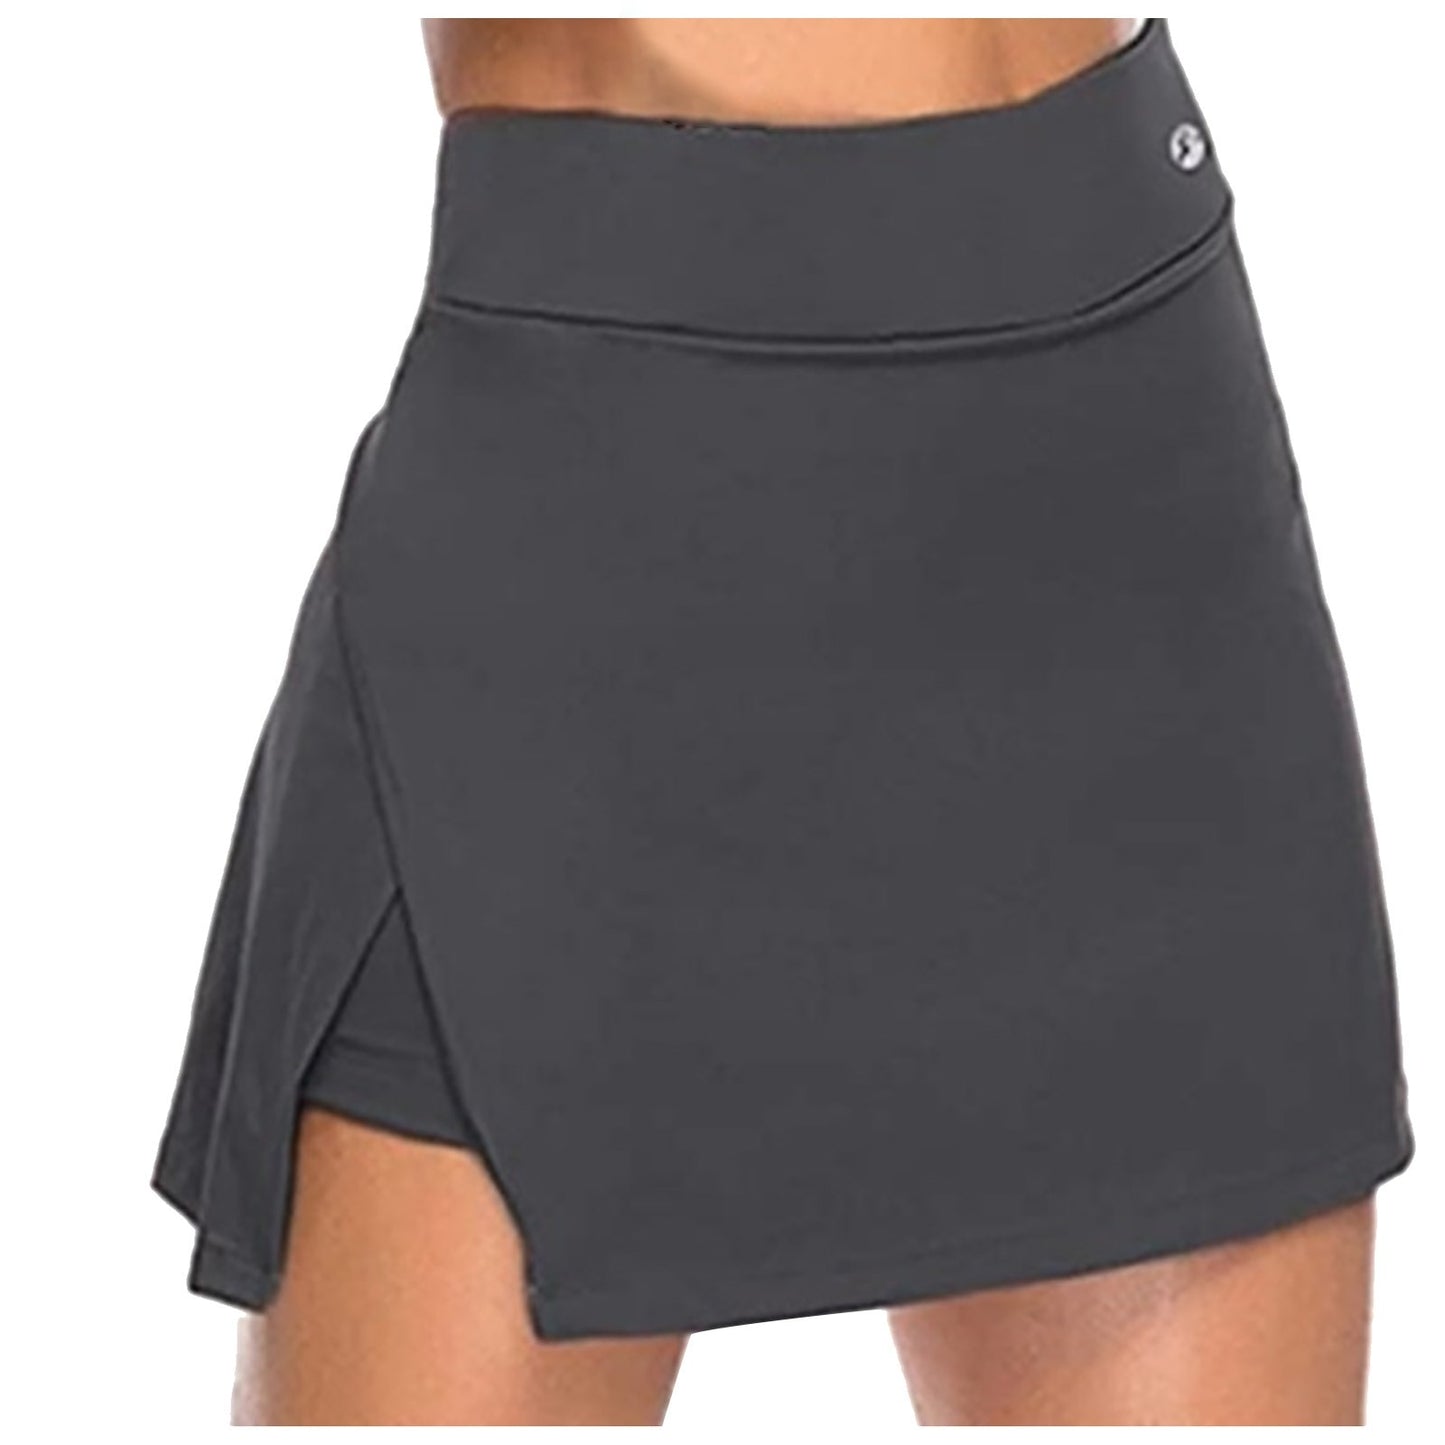 Women‘s Running Shorts, Tennis/Golf Shorts, Gym Shorts